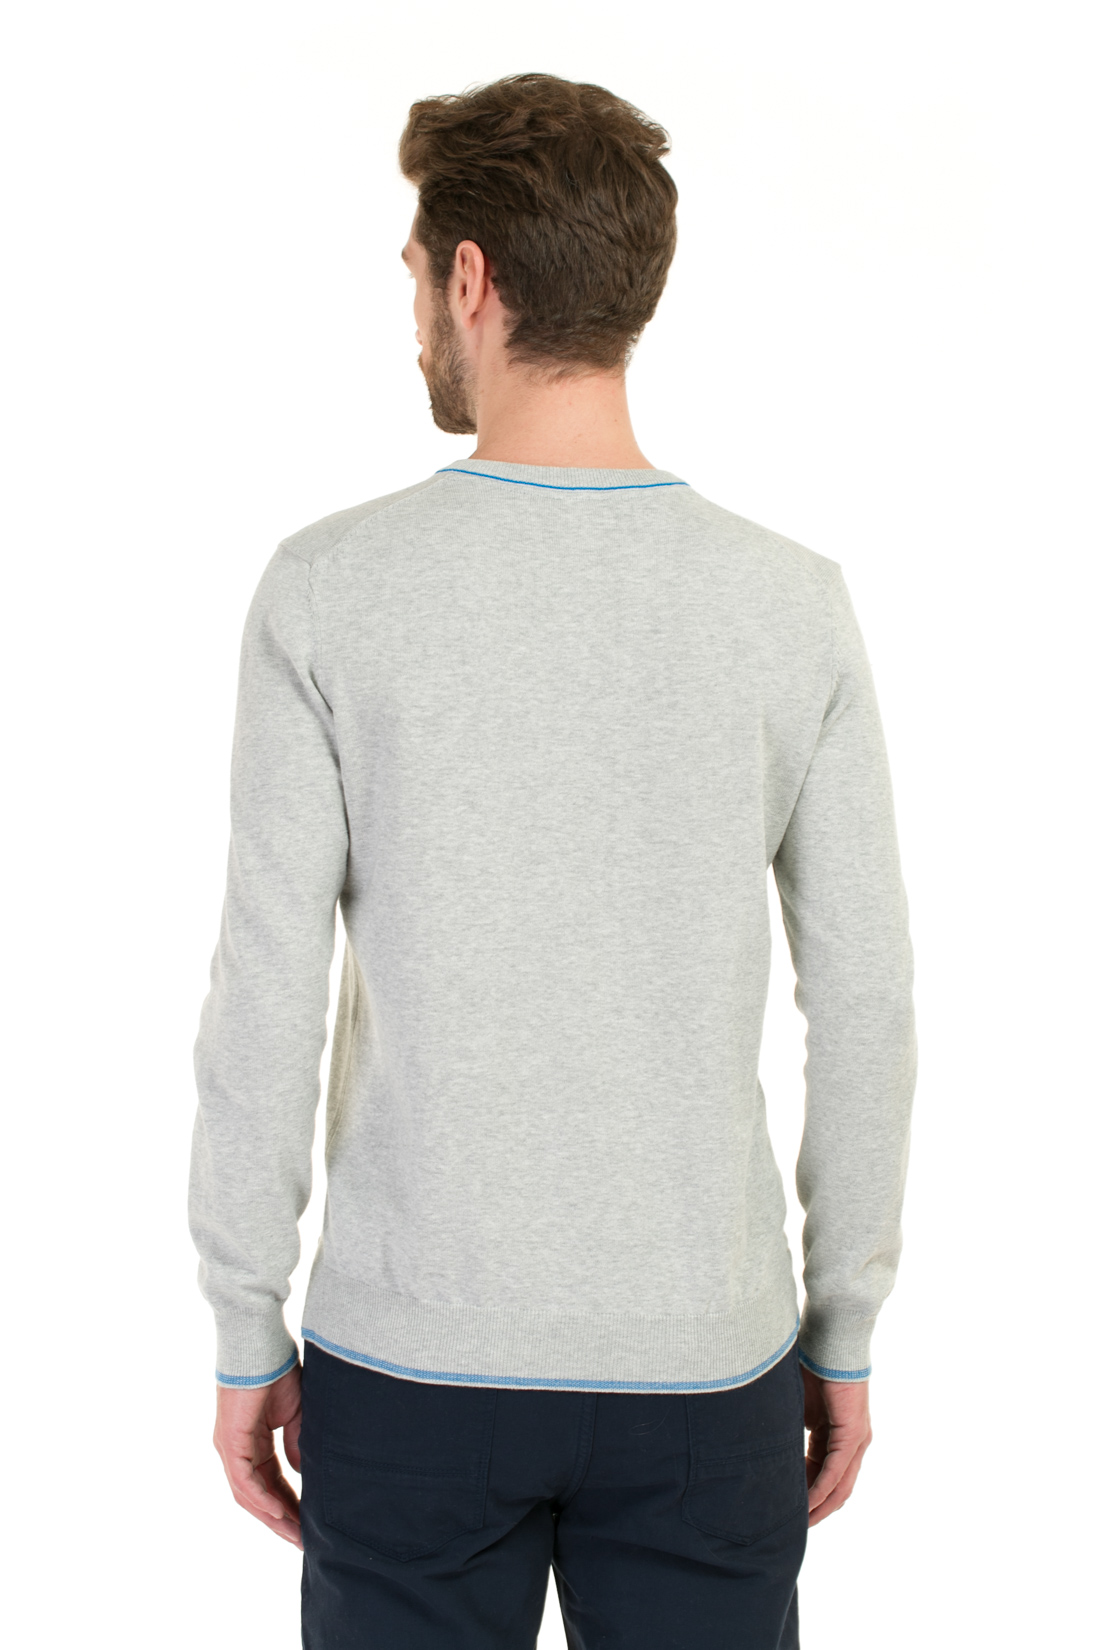 Пуловер с окантовкой (арт. baon B637011), размер L, цвет silver melange#серый Пуловер с окантовкой (арт. baon B637011) - фото 2